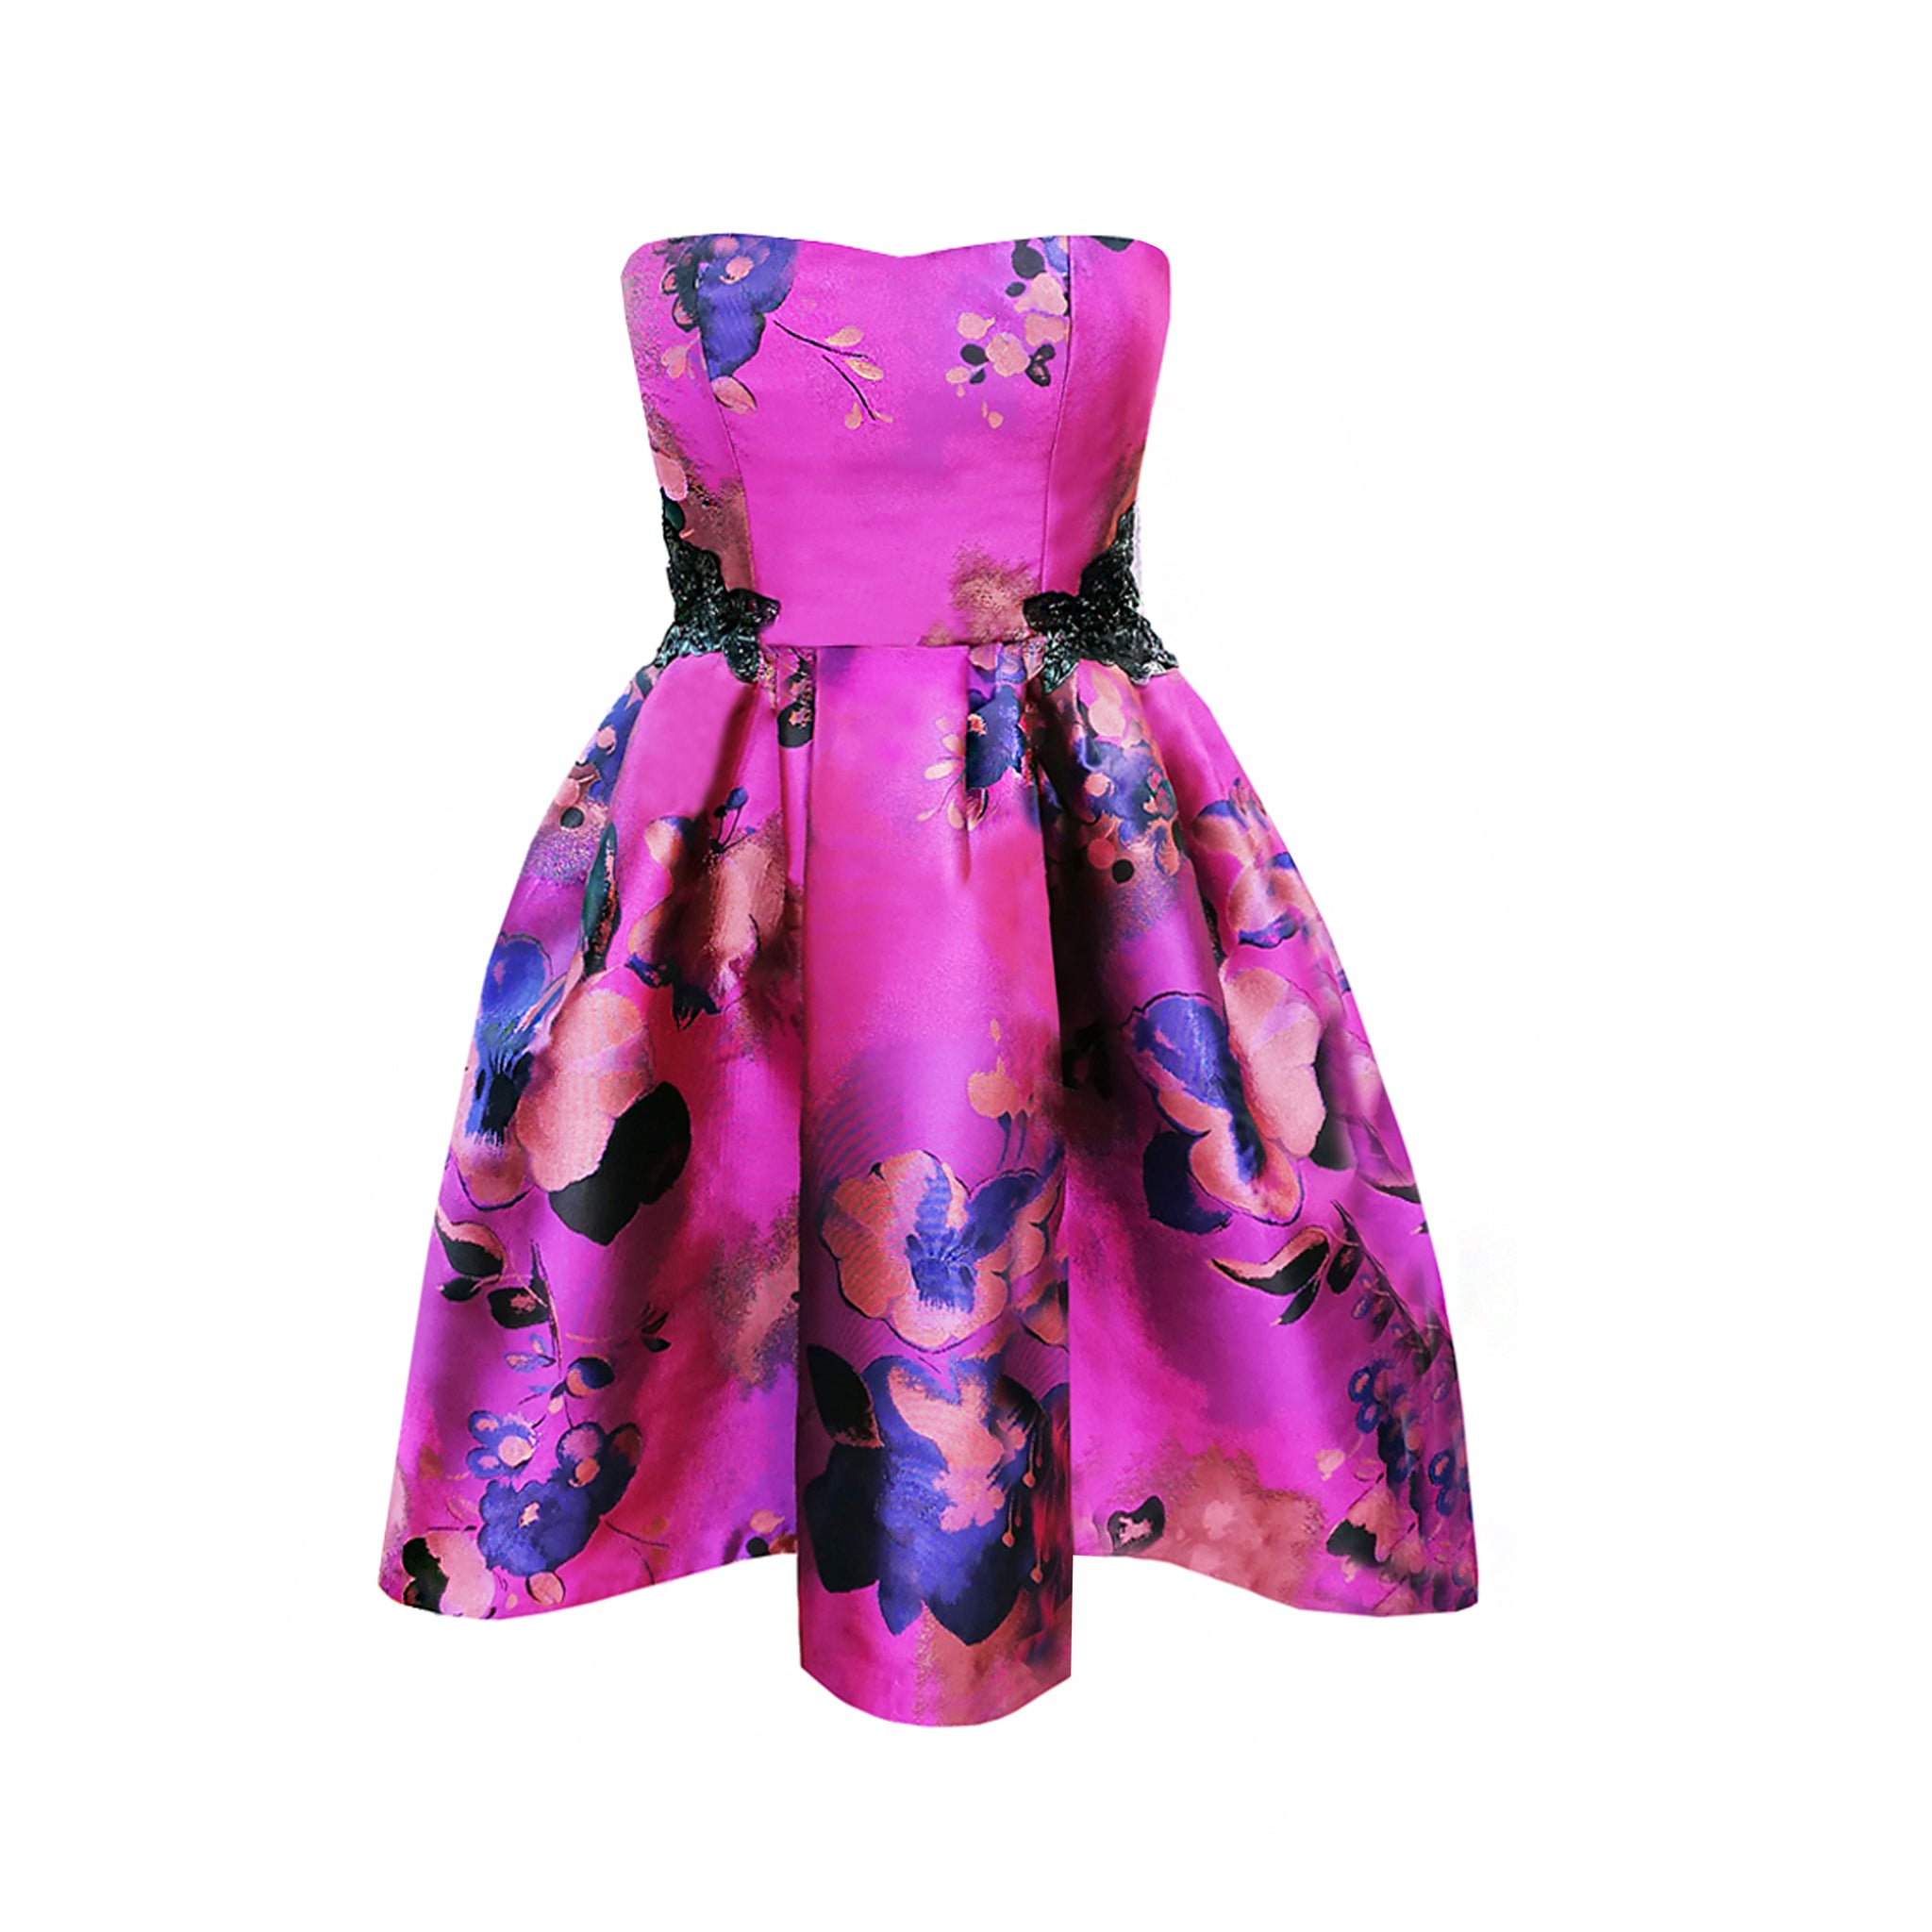 Leila pink bustier dress